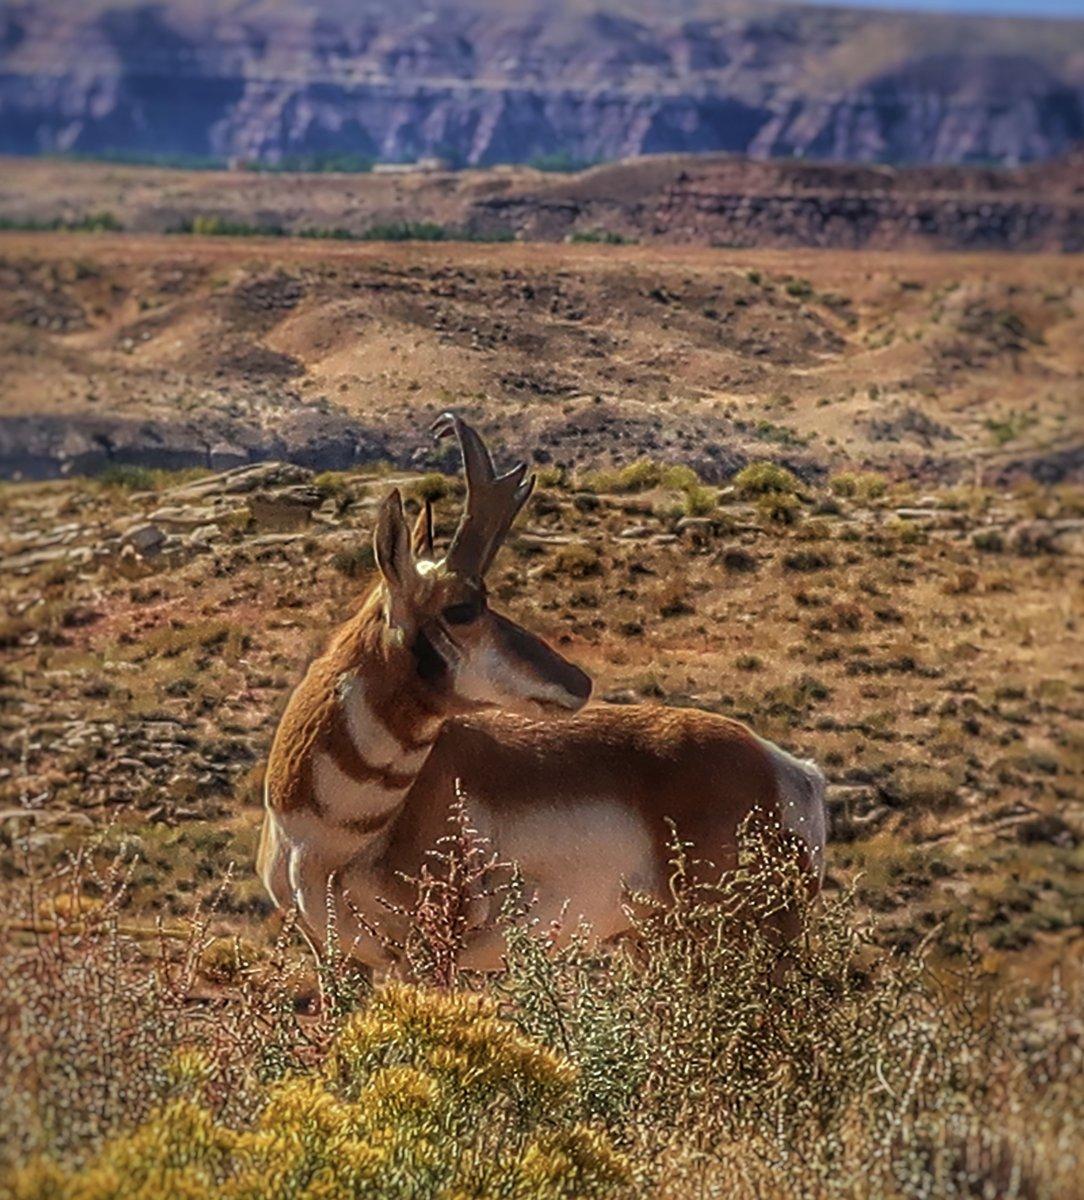 Very Cool Pronghorn Antelope